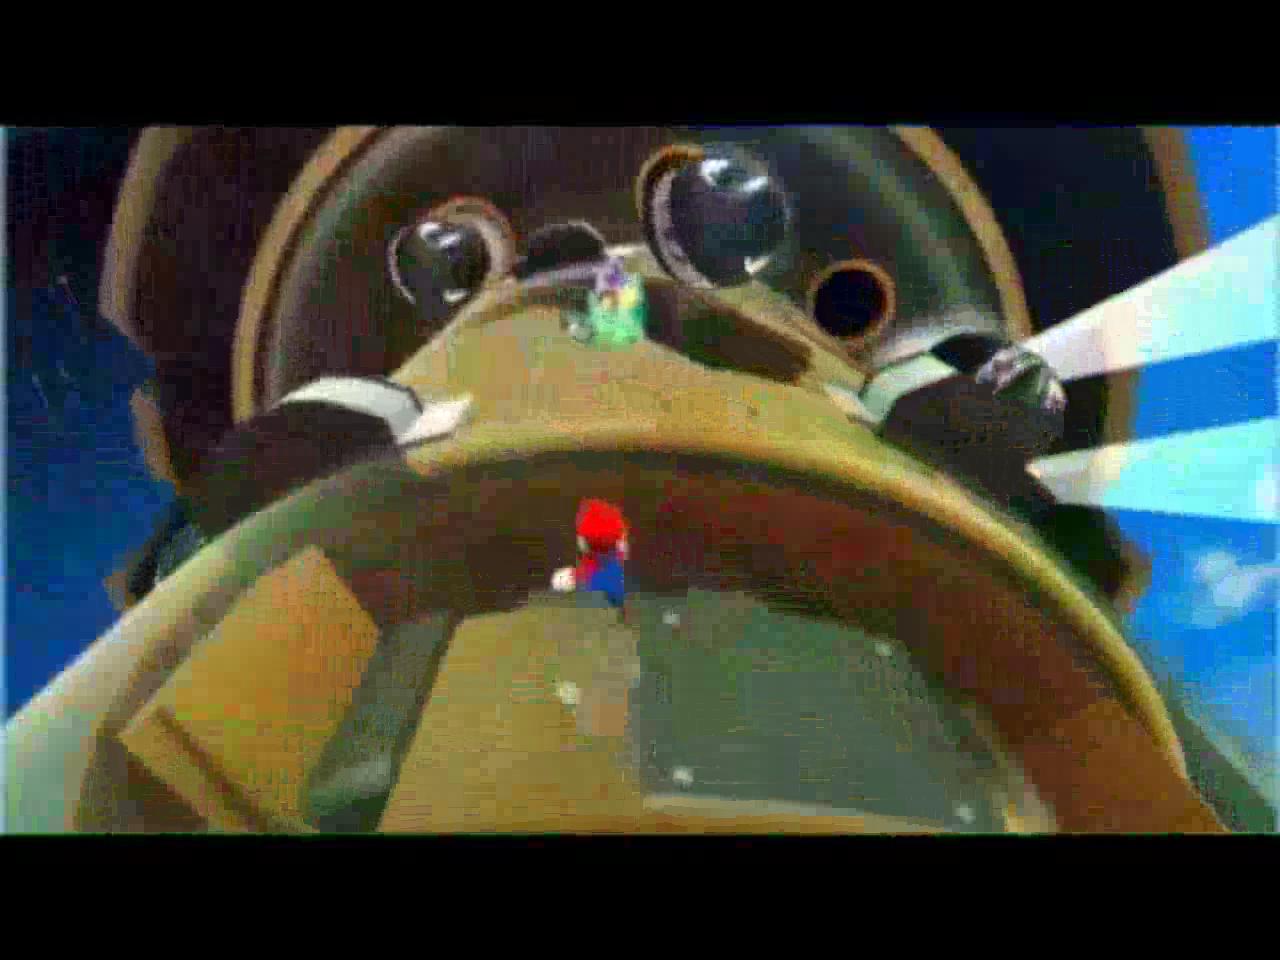 Super Mario Galaxy 2 - Long Gameplay